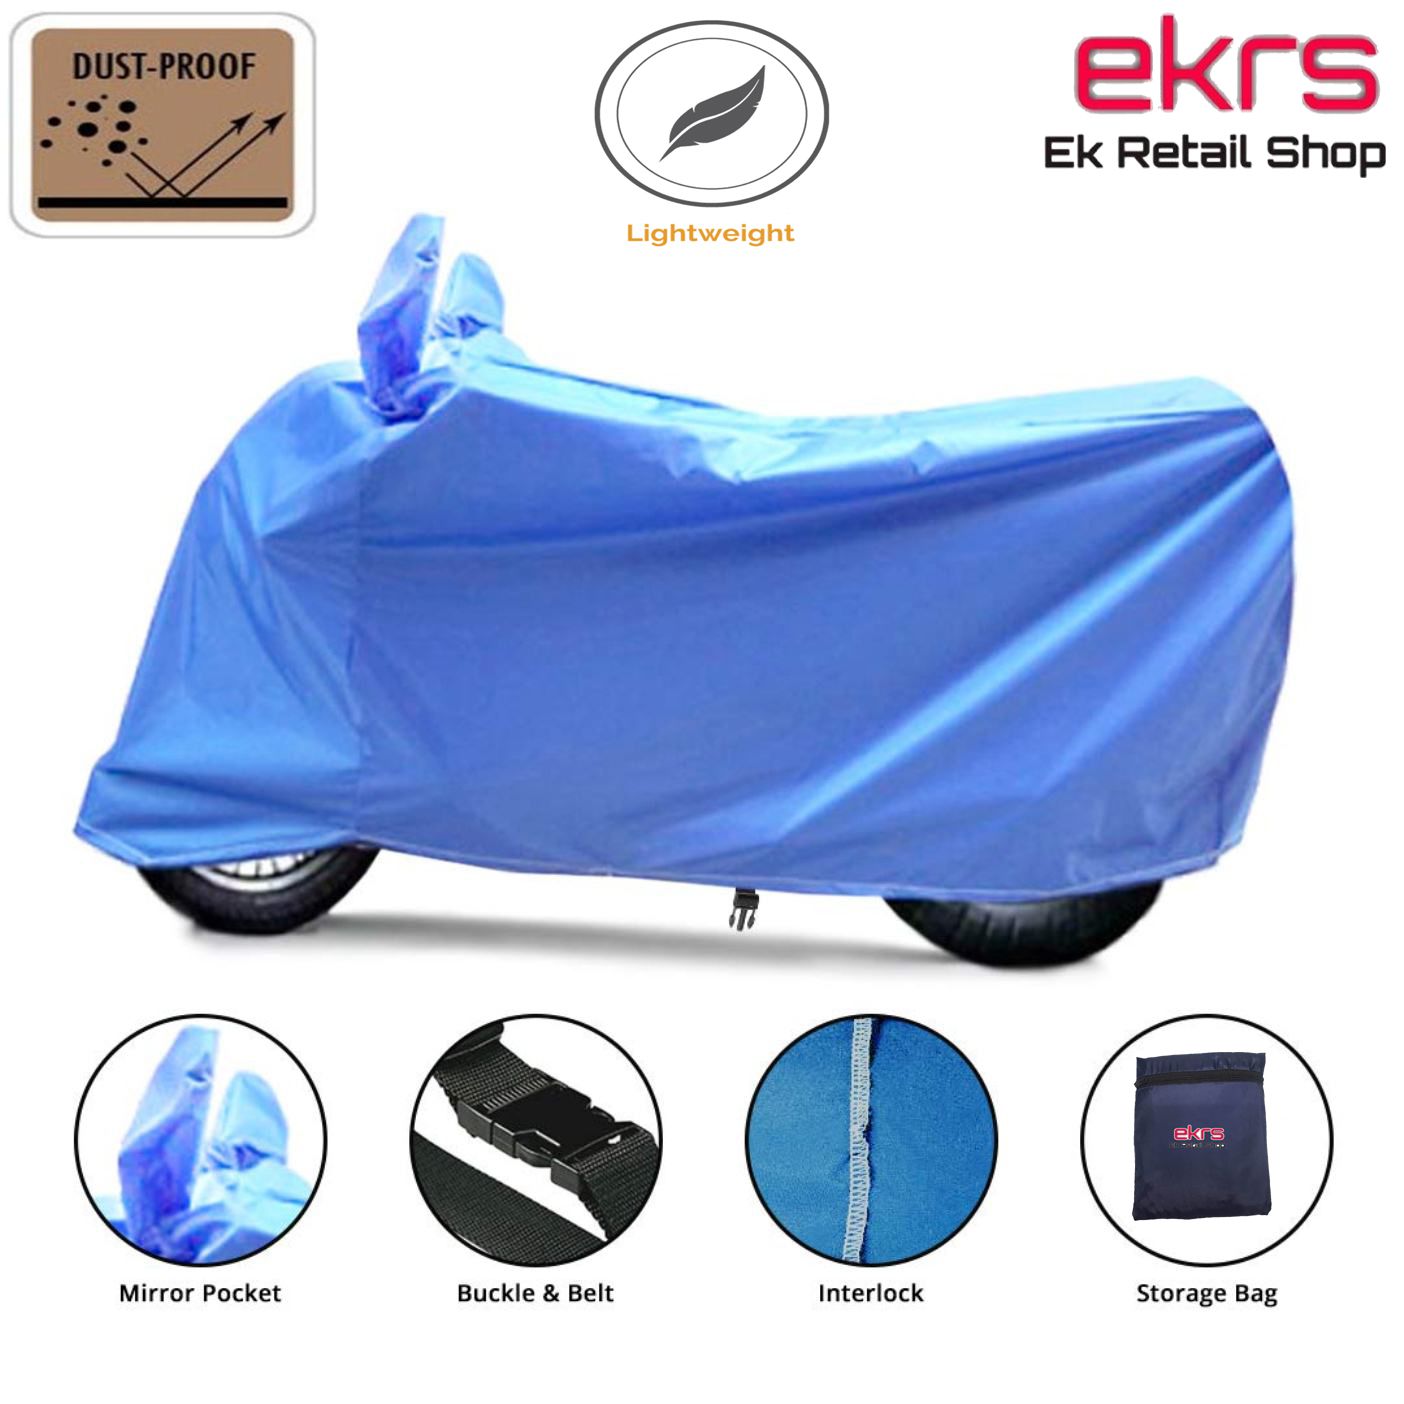 Ek Retail Shop Bike Body Cover for Monsoon - Water-Resistant, Dustproof, UV Guard -  for Honda Dio